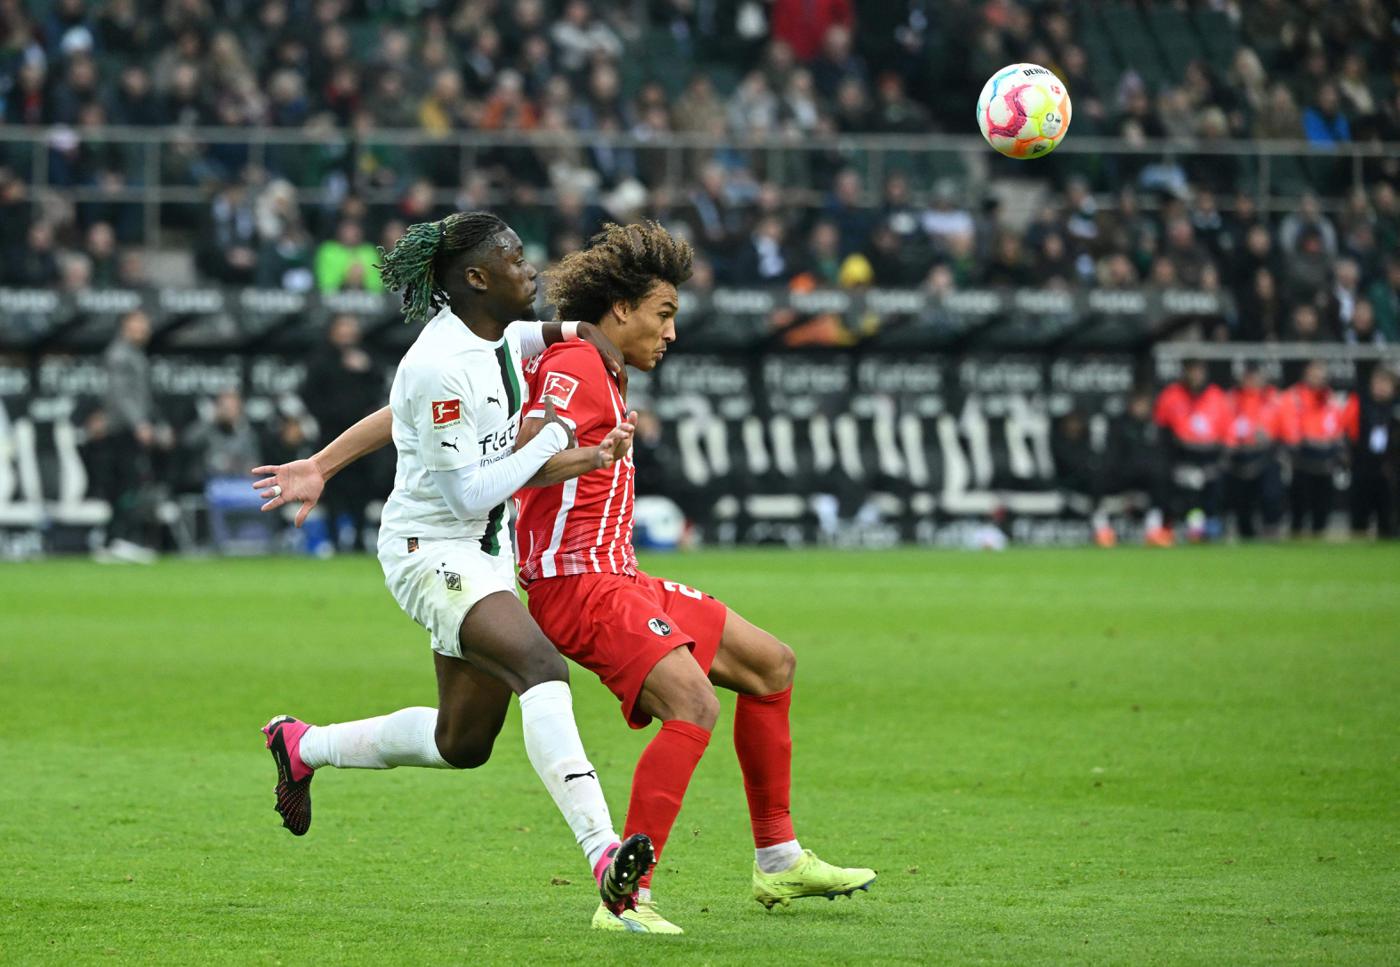 Borussia M vs Freiburg - 0-0. German Championship, round 23. Match Review, Statistics